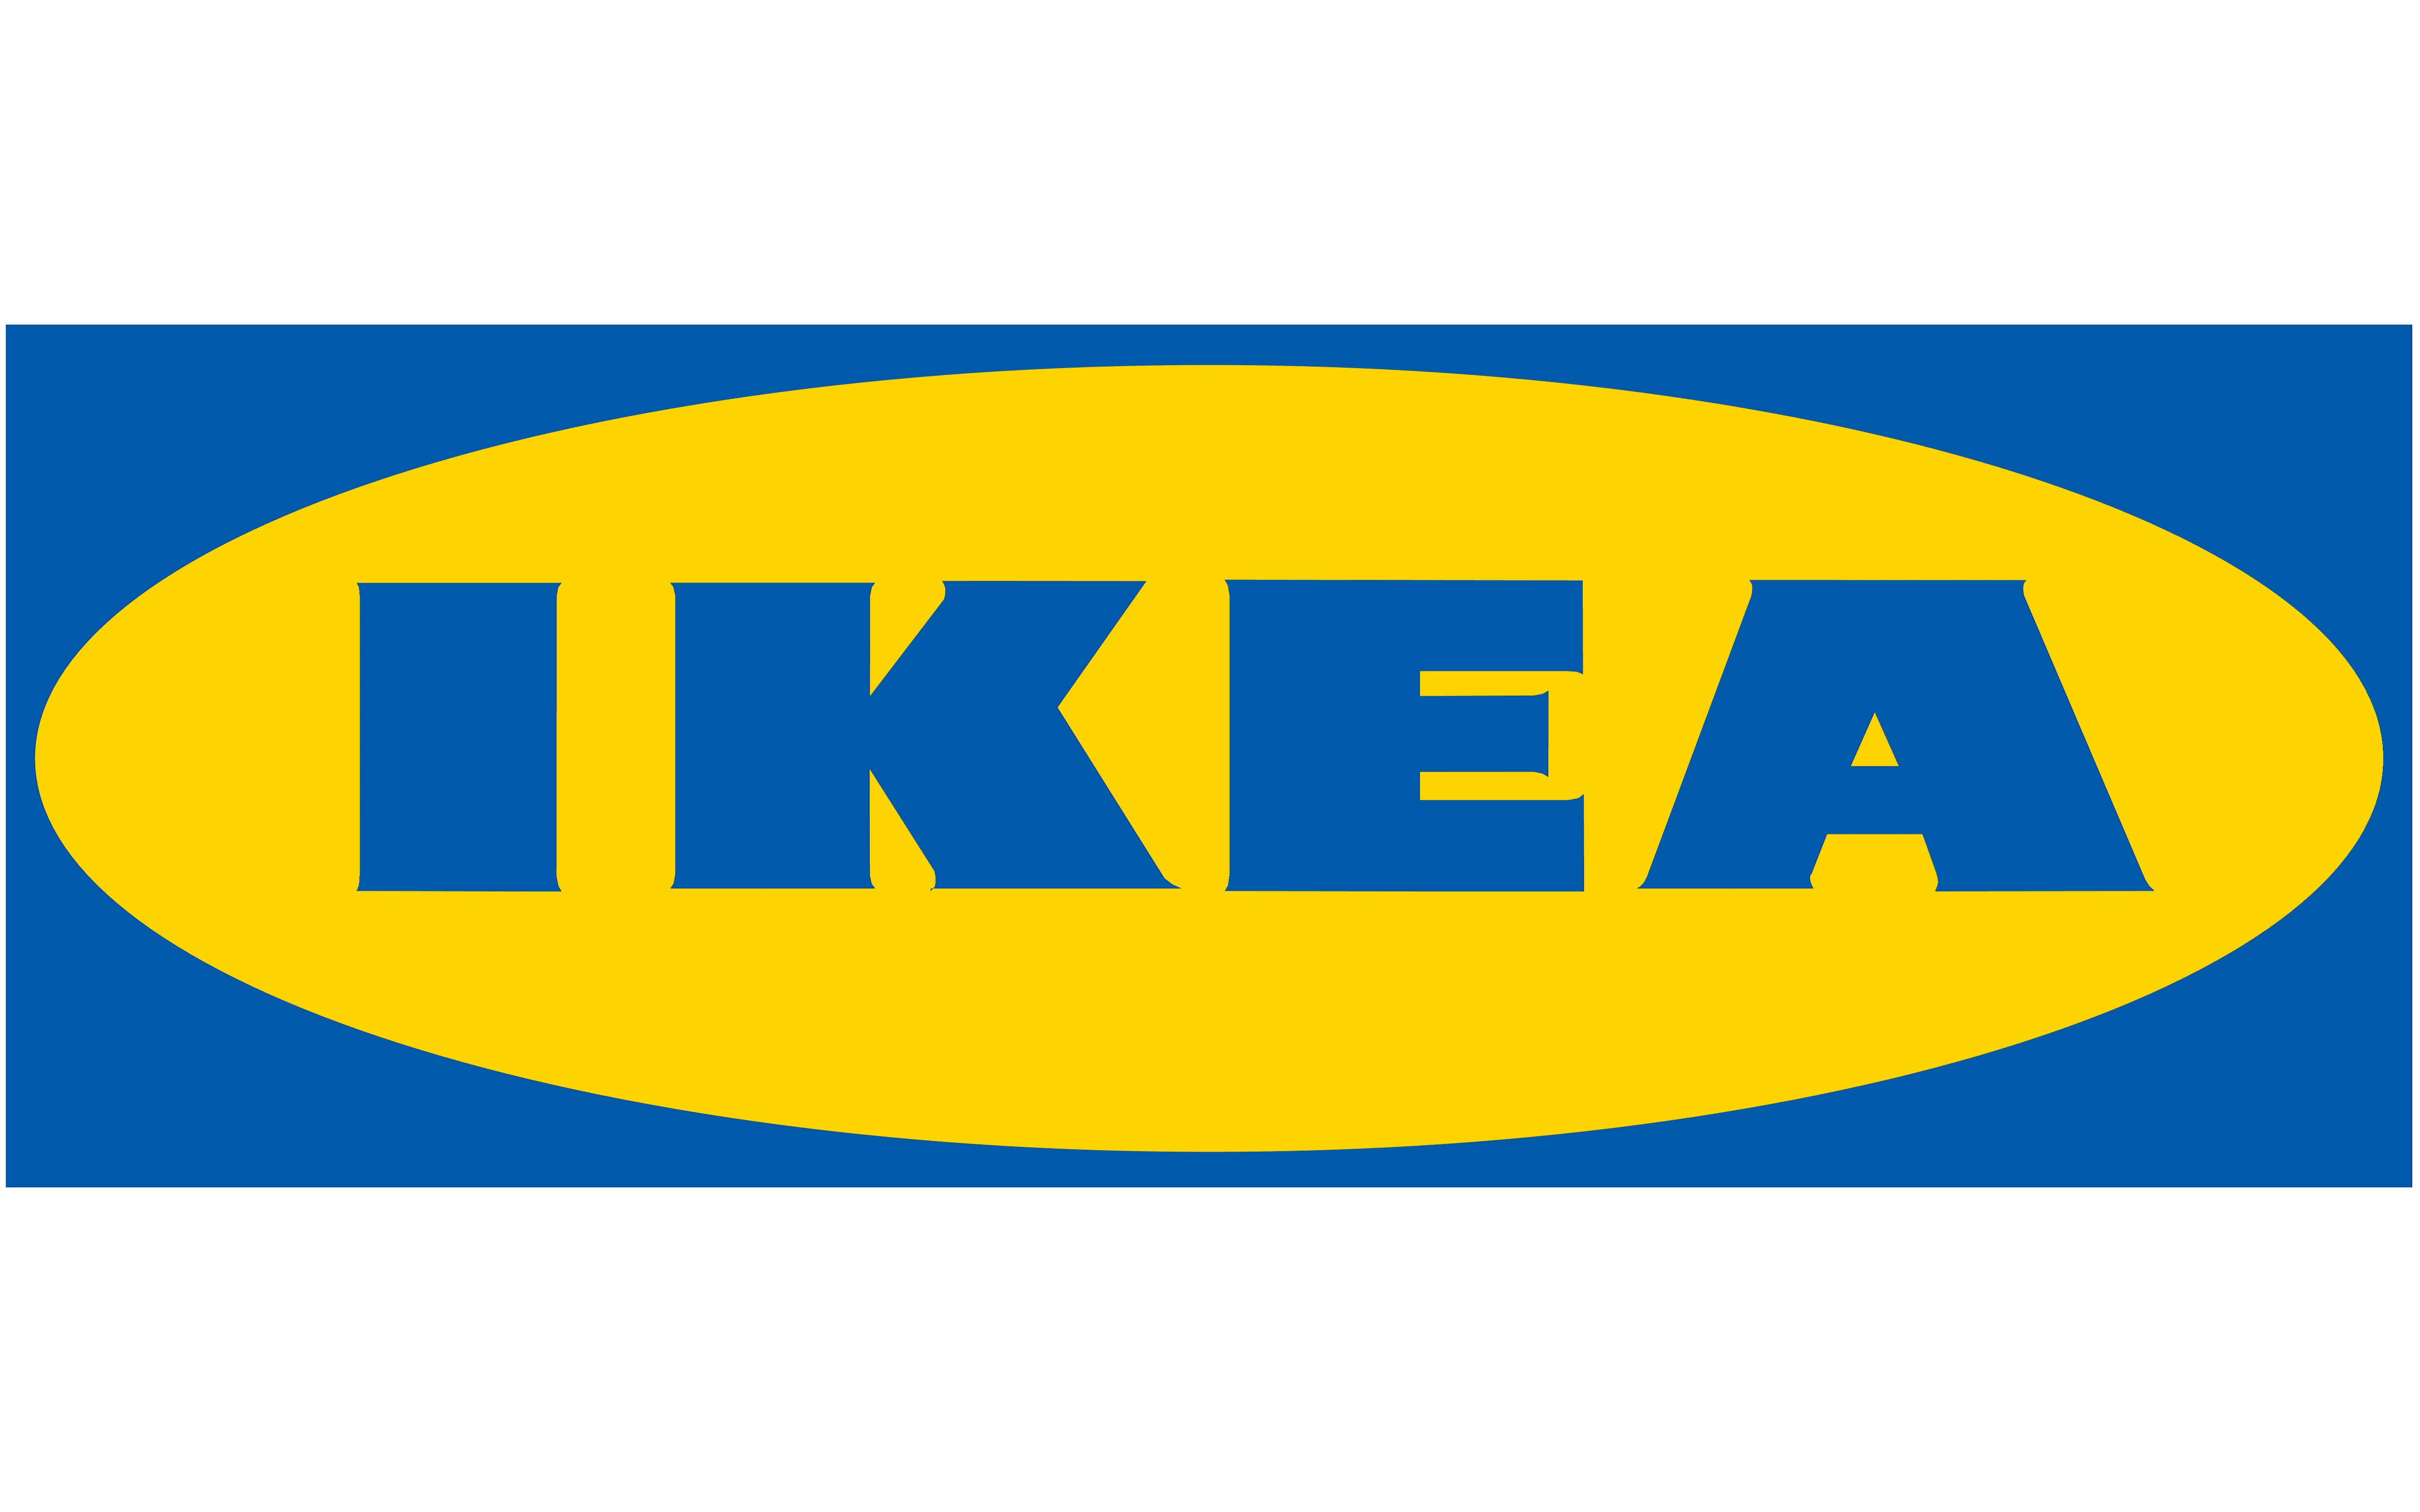 Ikea warehouse recruitment process